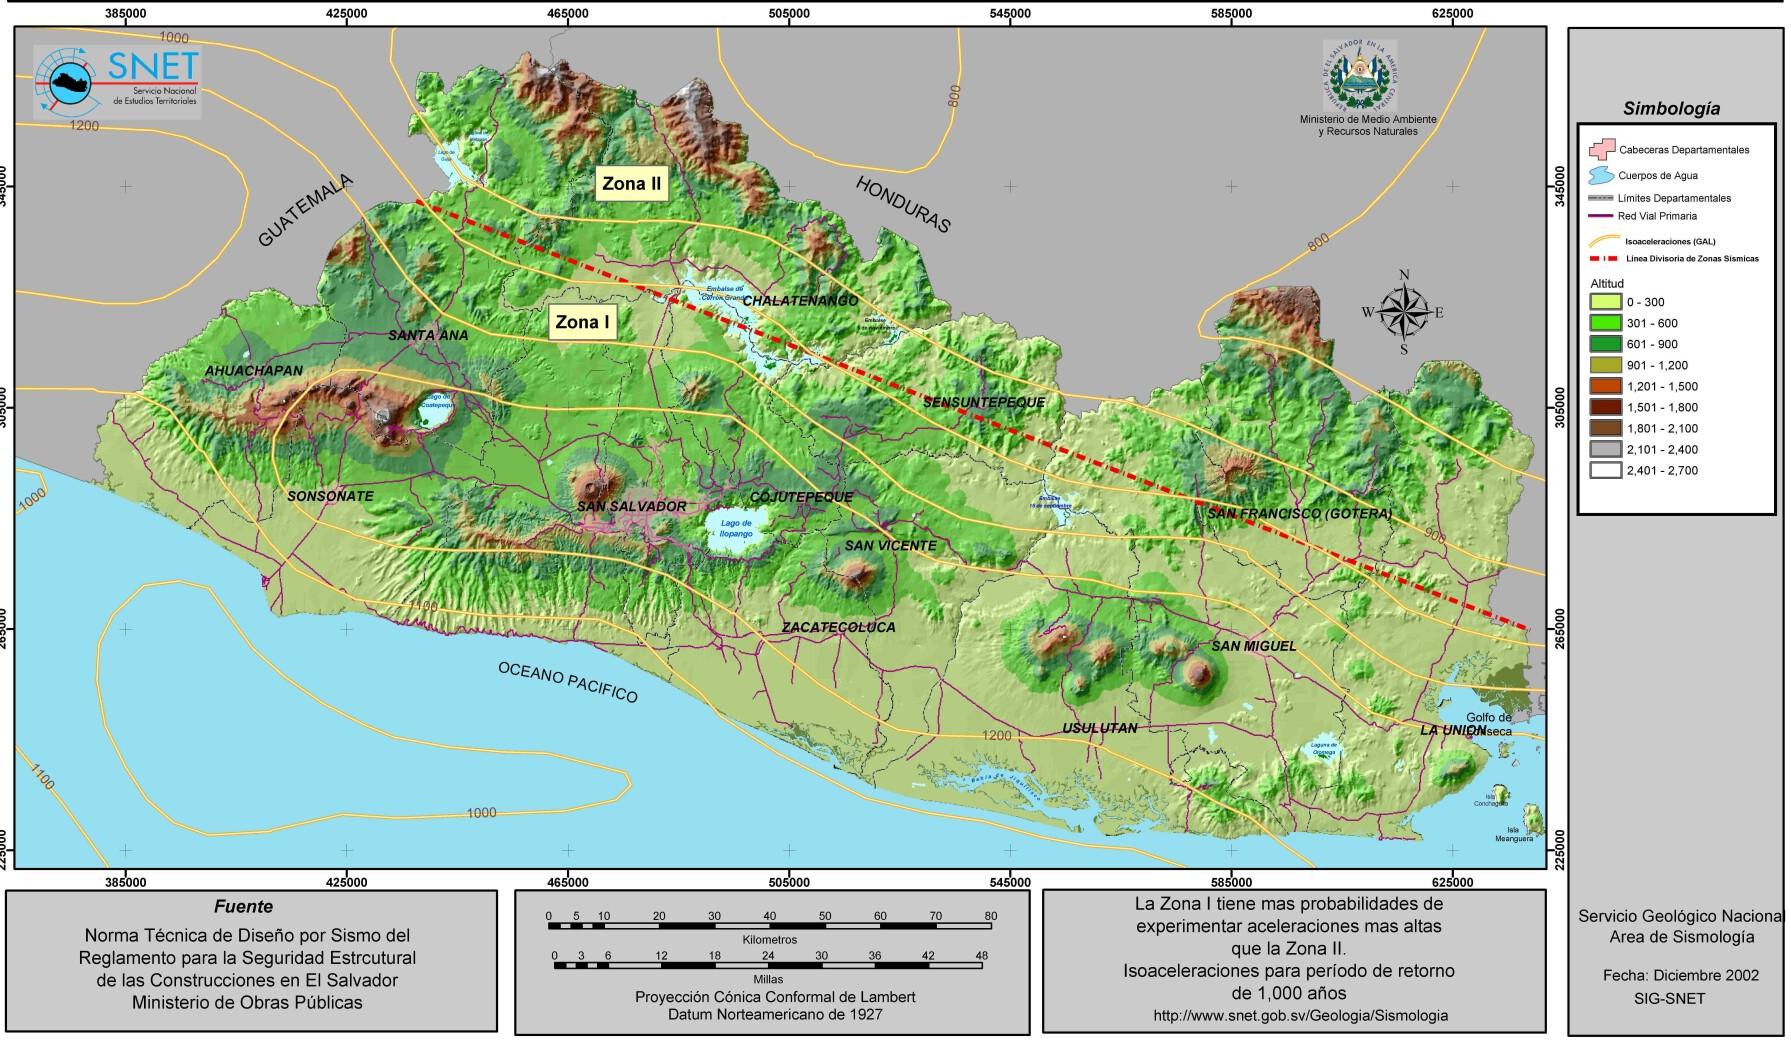 Seismicity Map, El Salvador